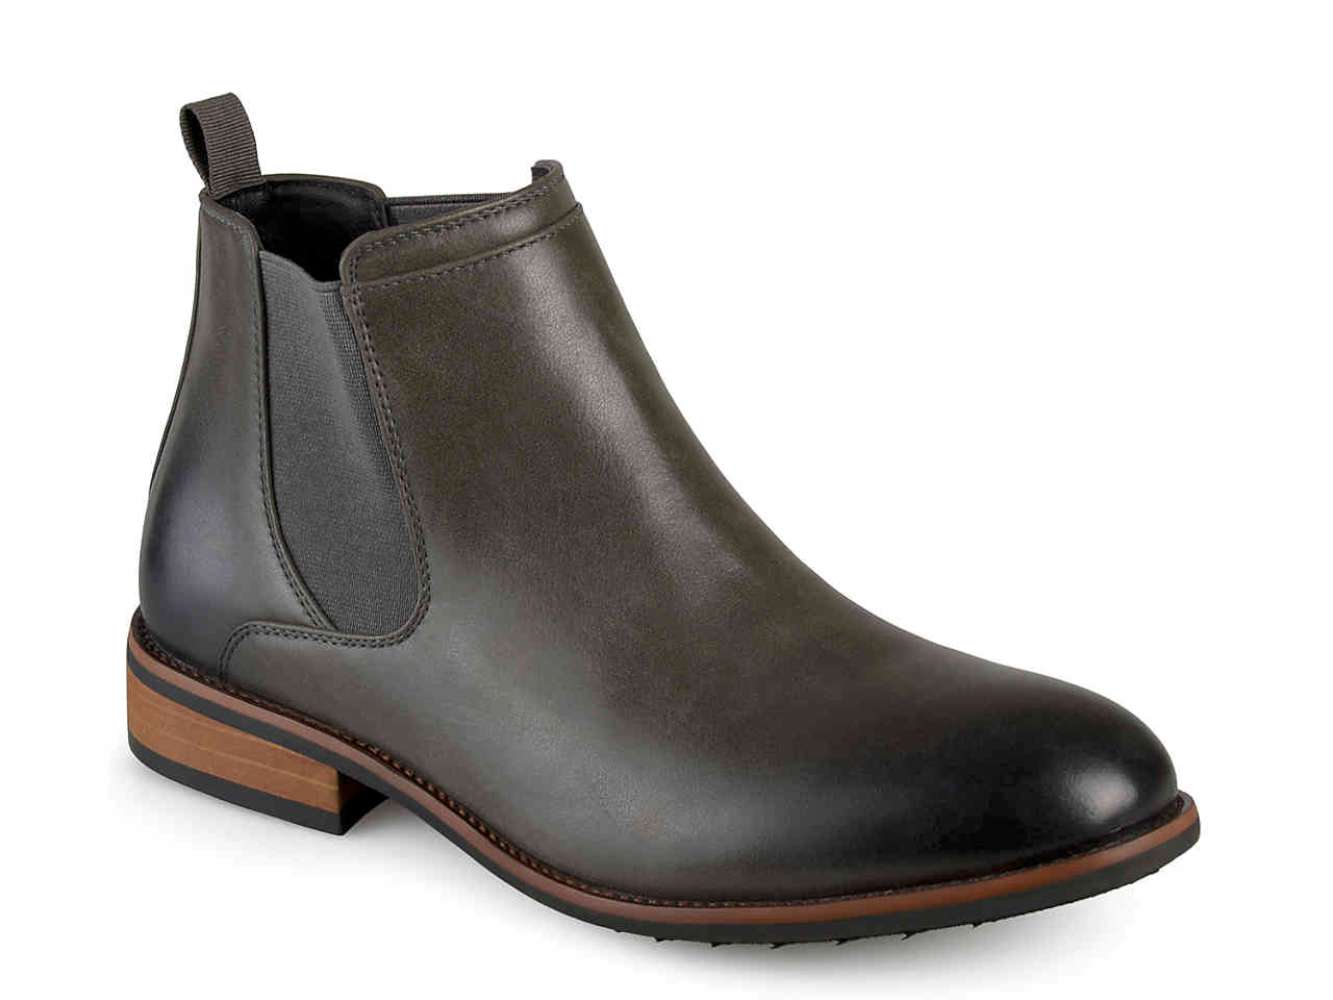 Vance Co. Mens Landon Almond Toe Ankle Chelsea Boots, Grey, Size 8.5 | eBay